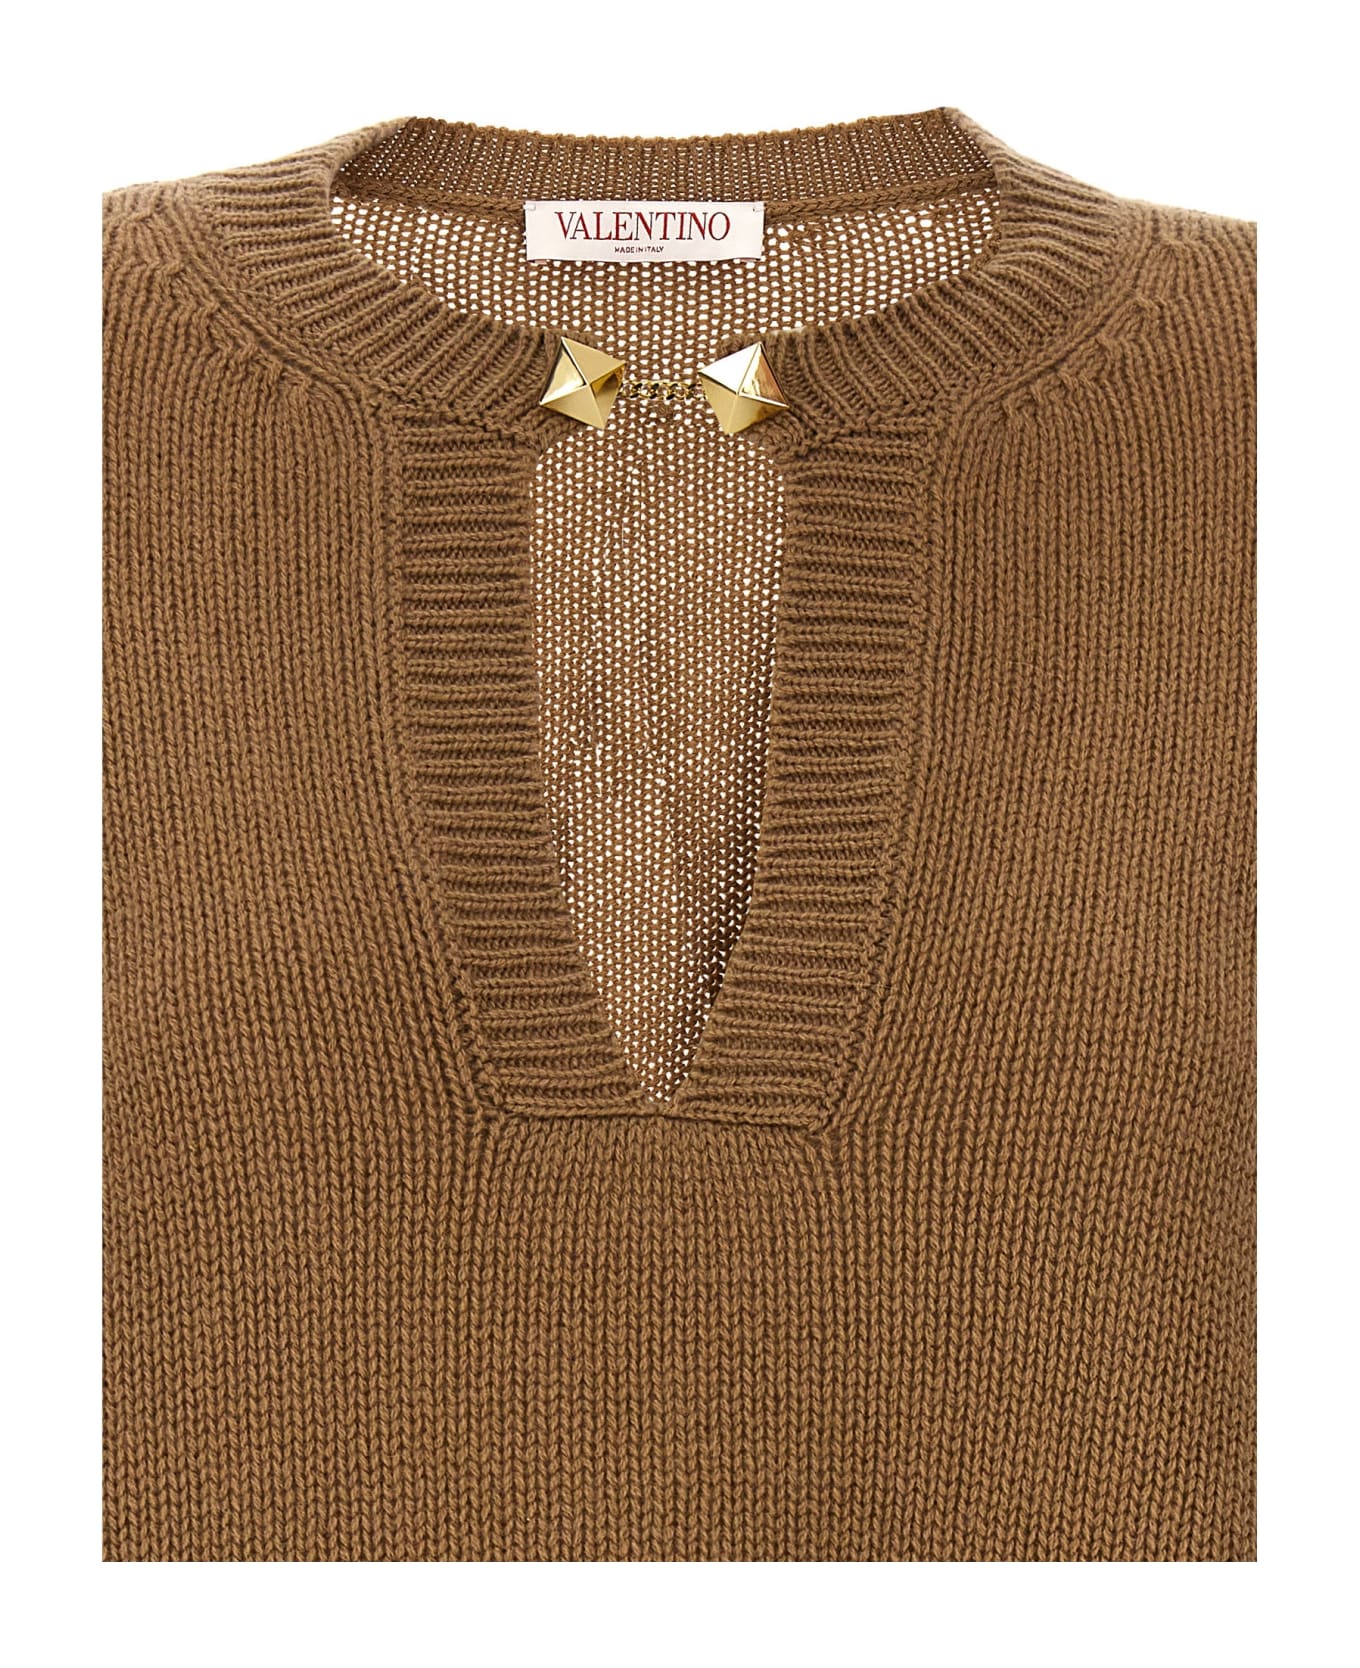 Valentino Sweater With Stud Detail - Beige